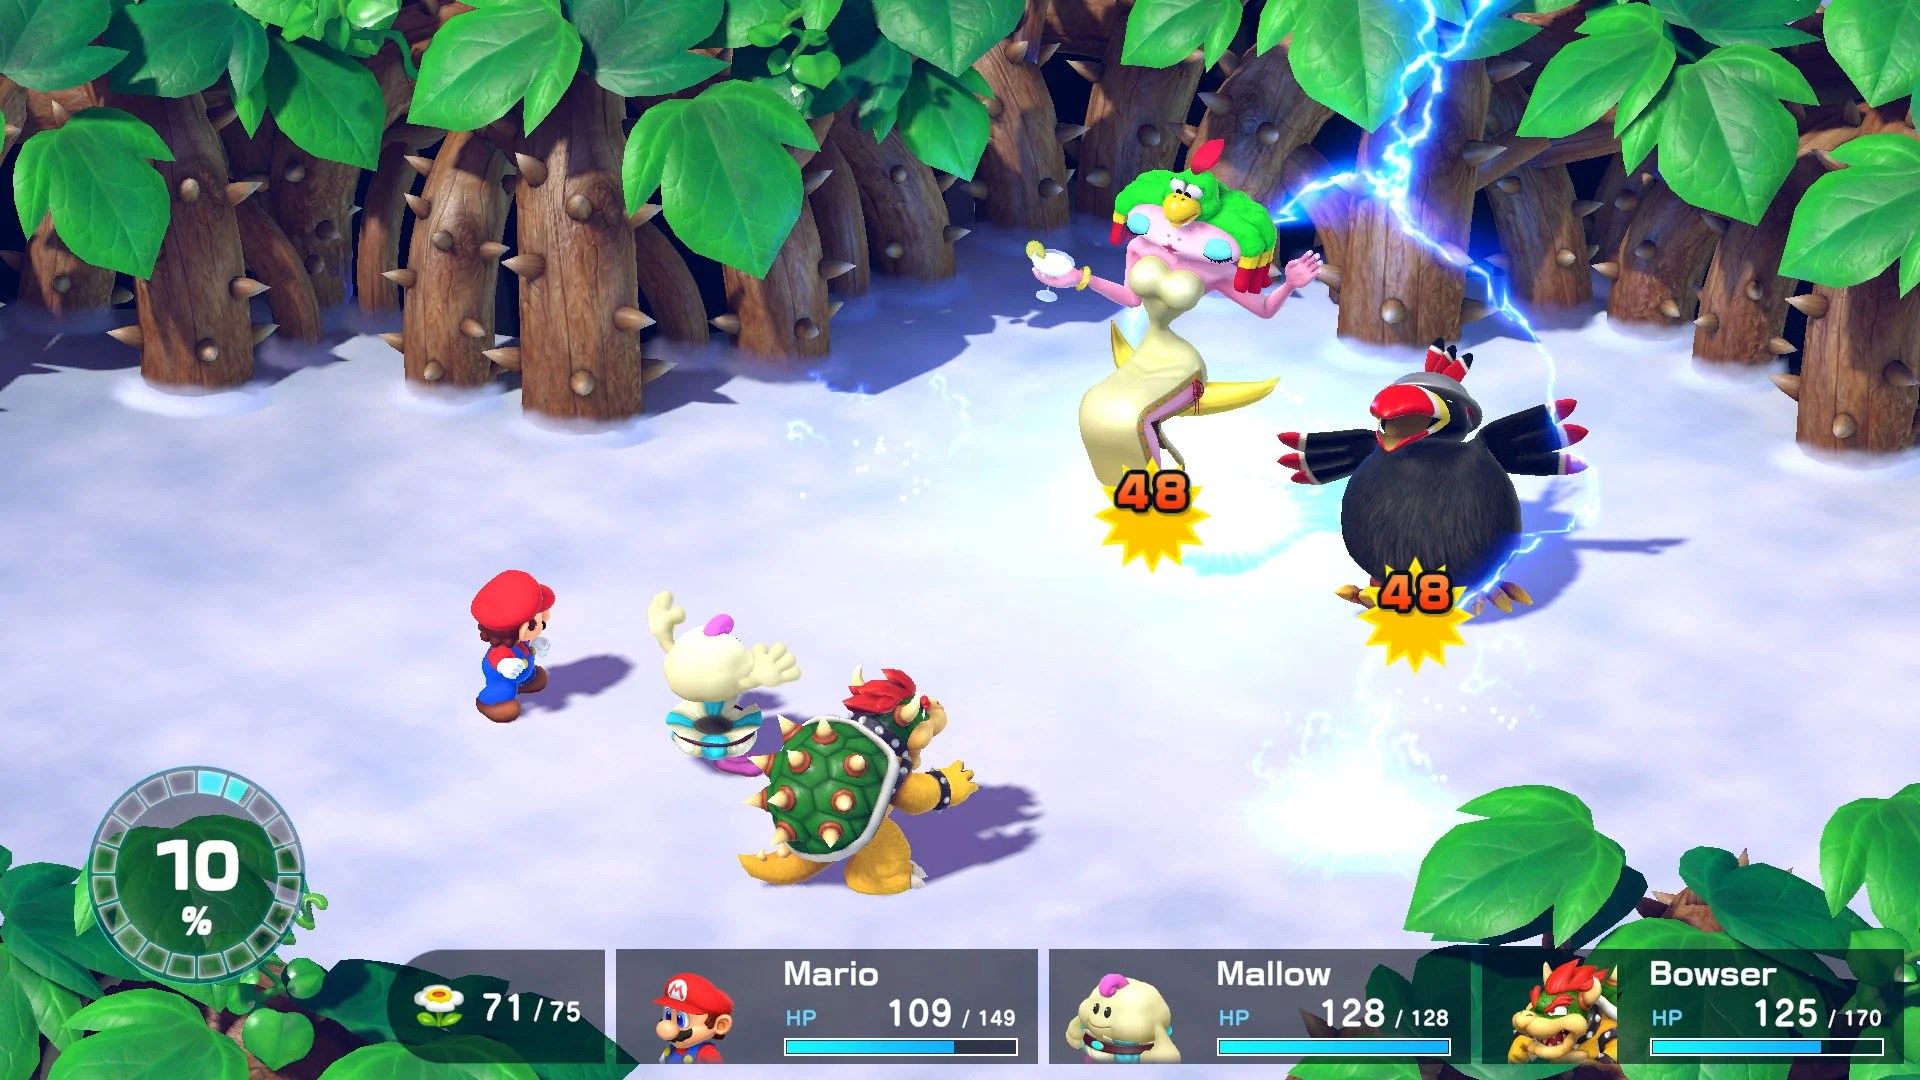 Super Mario RPG: Goomba Thumping Rewards